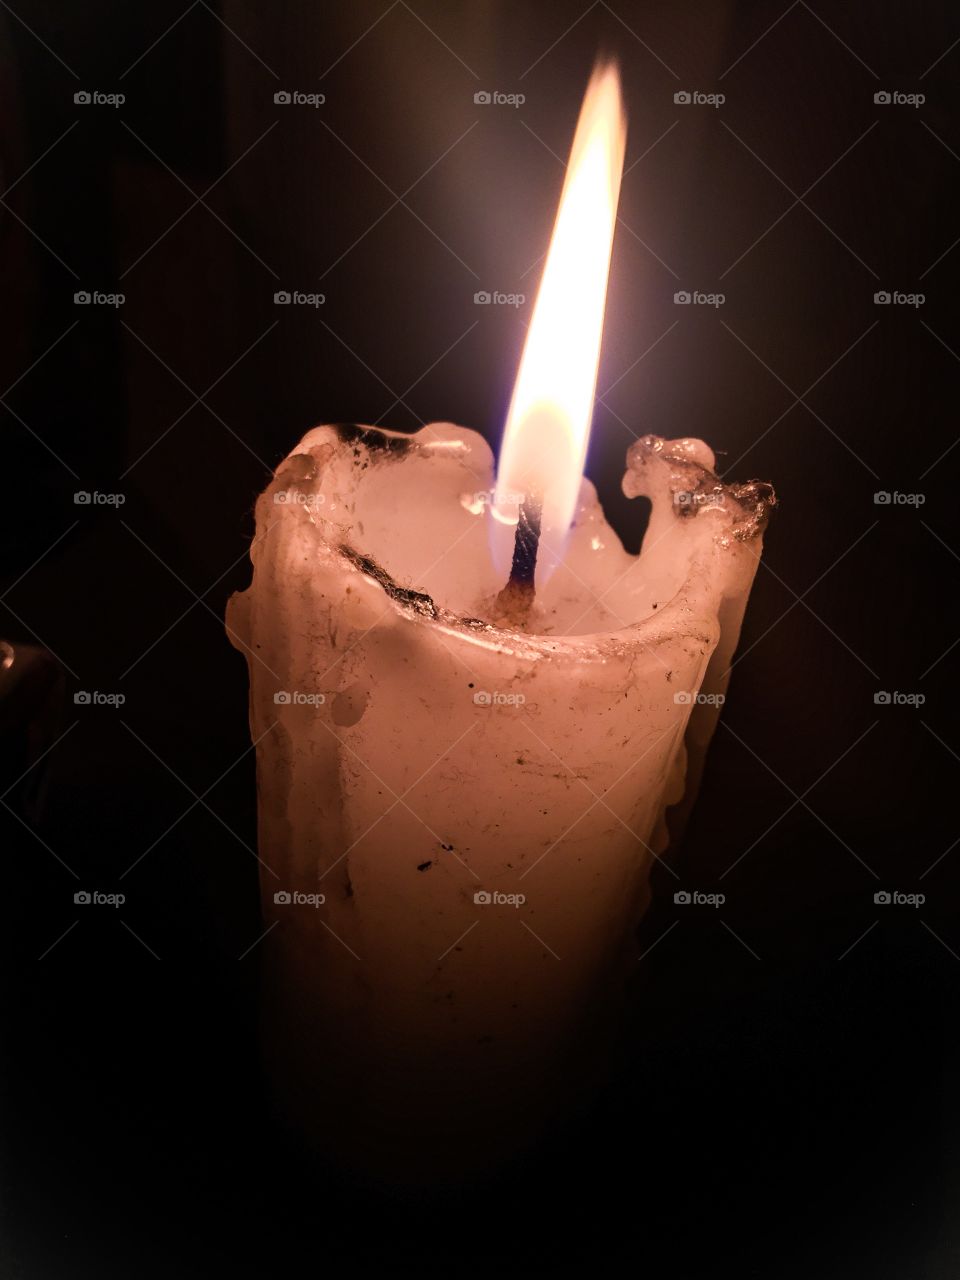 Sweet candle lighting design art 